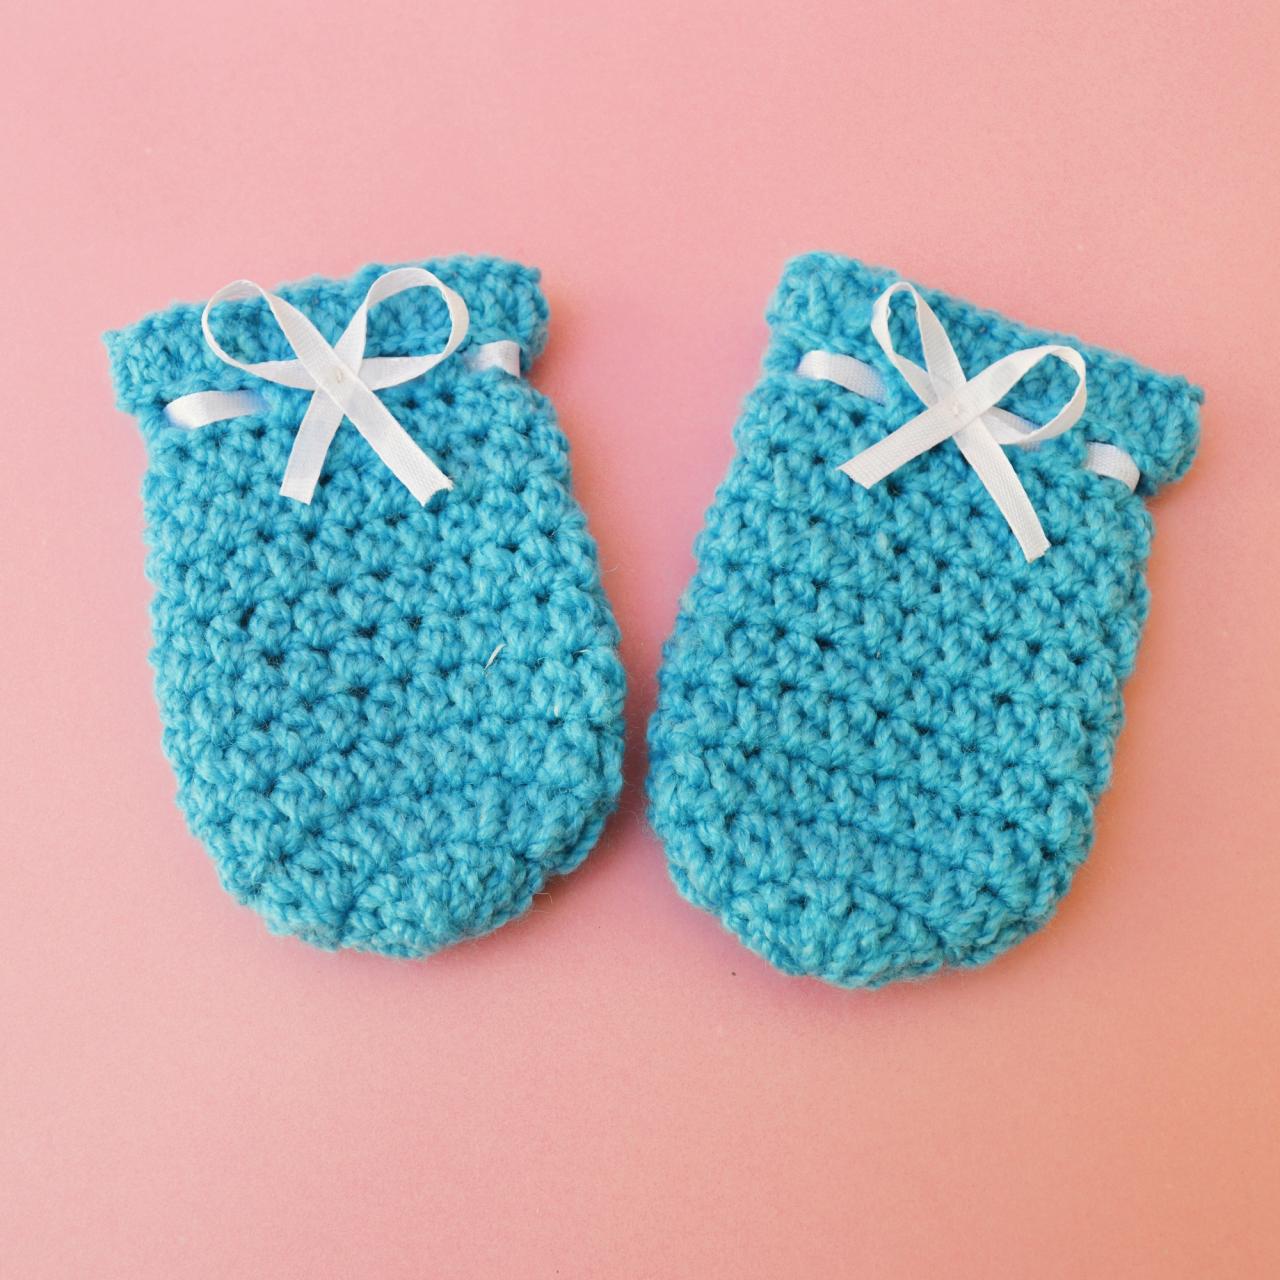 Crochet baby mittens - Sky Blue